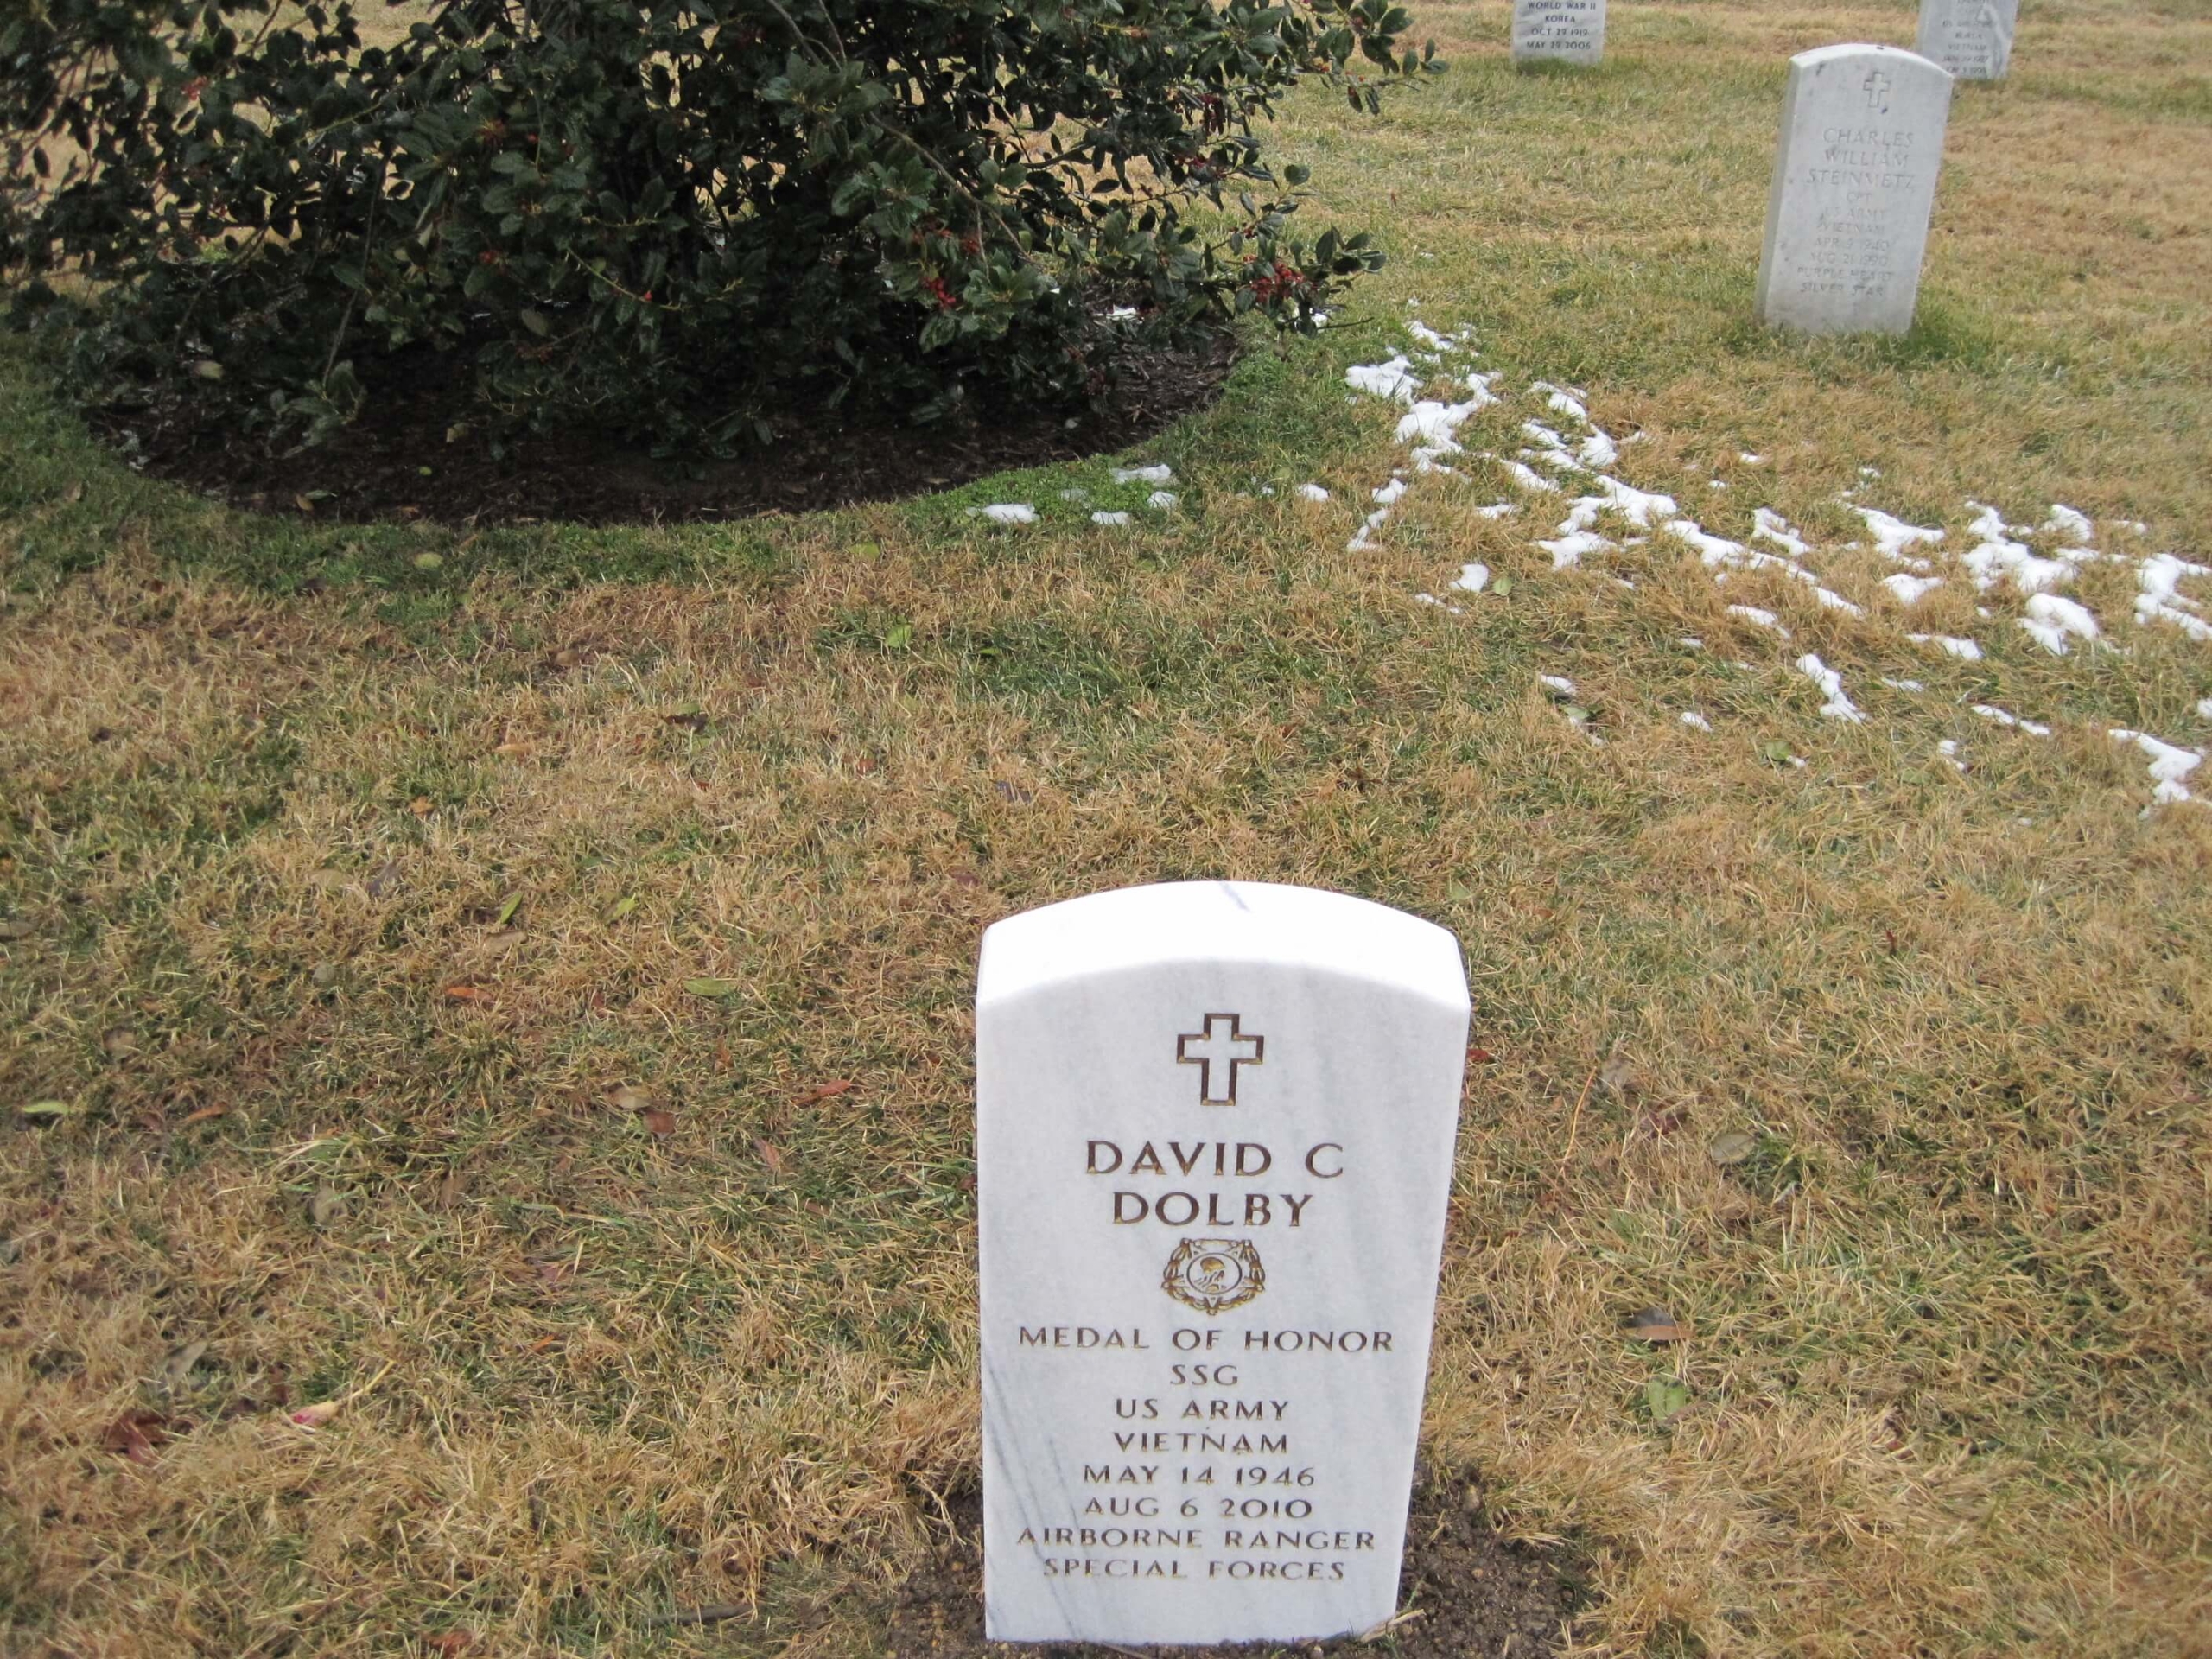 dcdolby-gravesite-photo-by-eileen-horan-february-2011-003